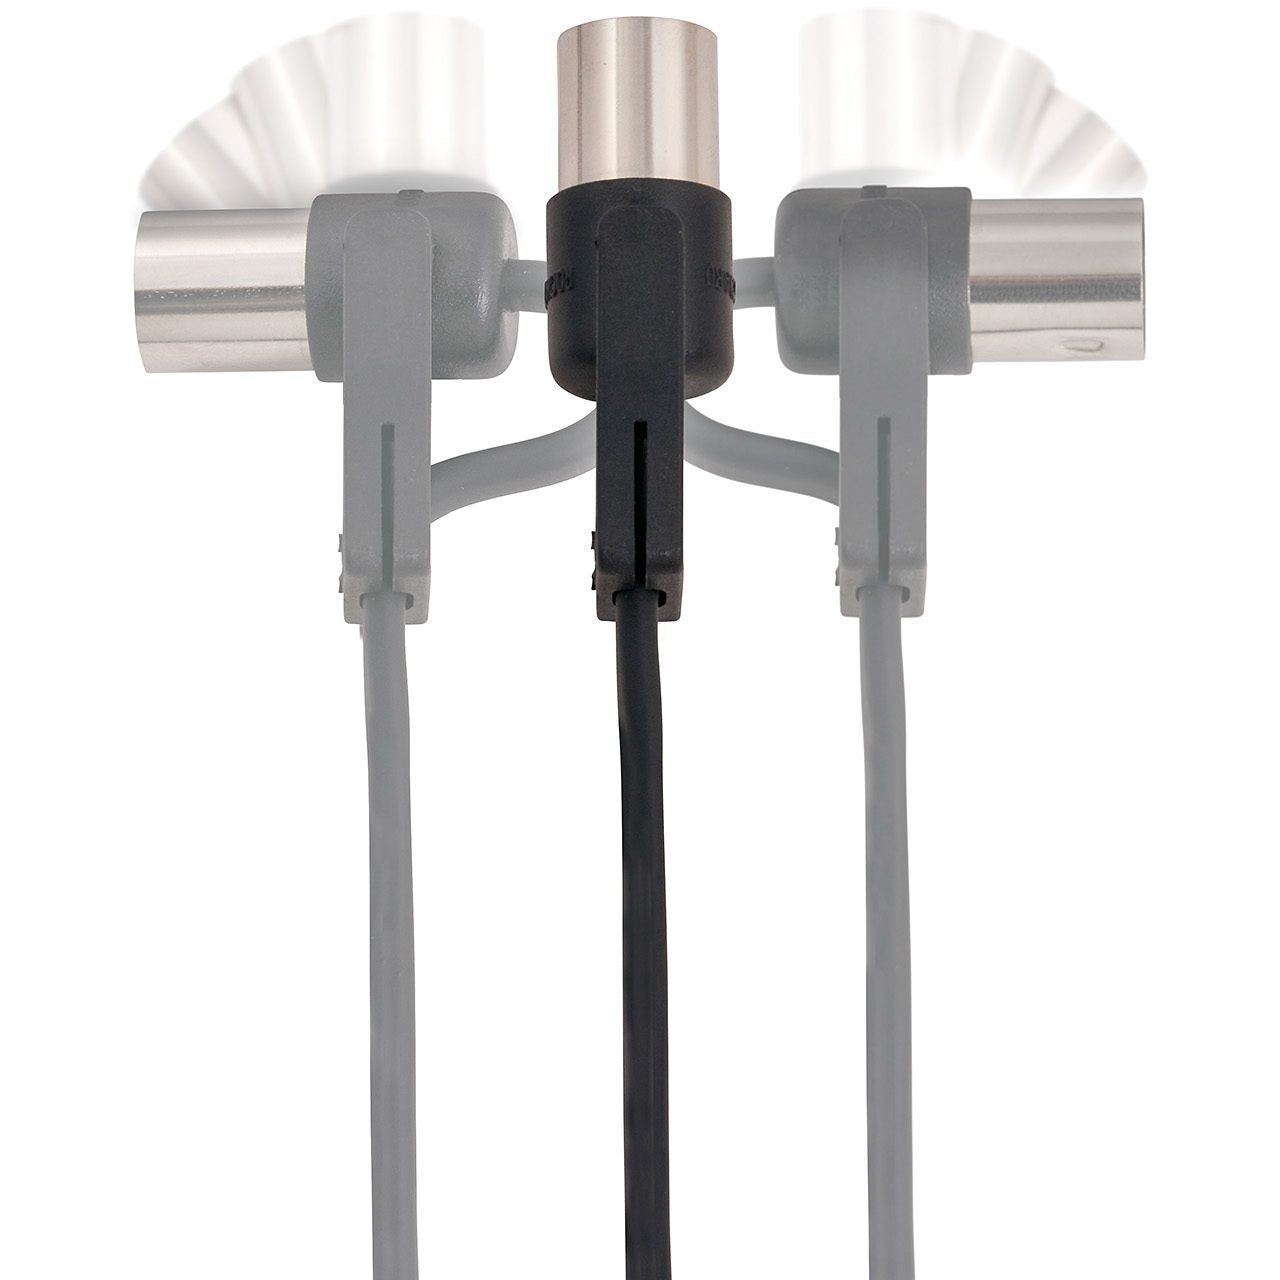 RockBoard FlaX Plug MIDI Cable, 500cm